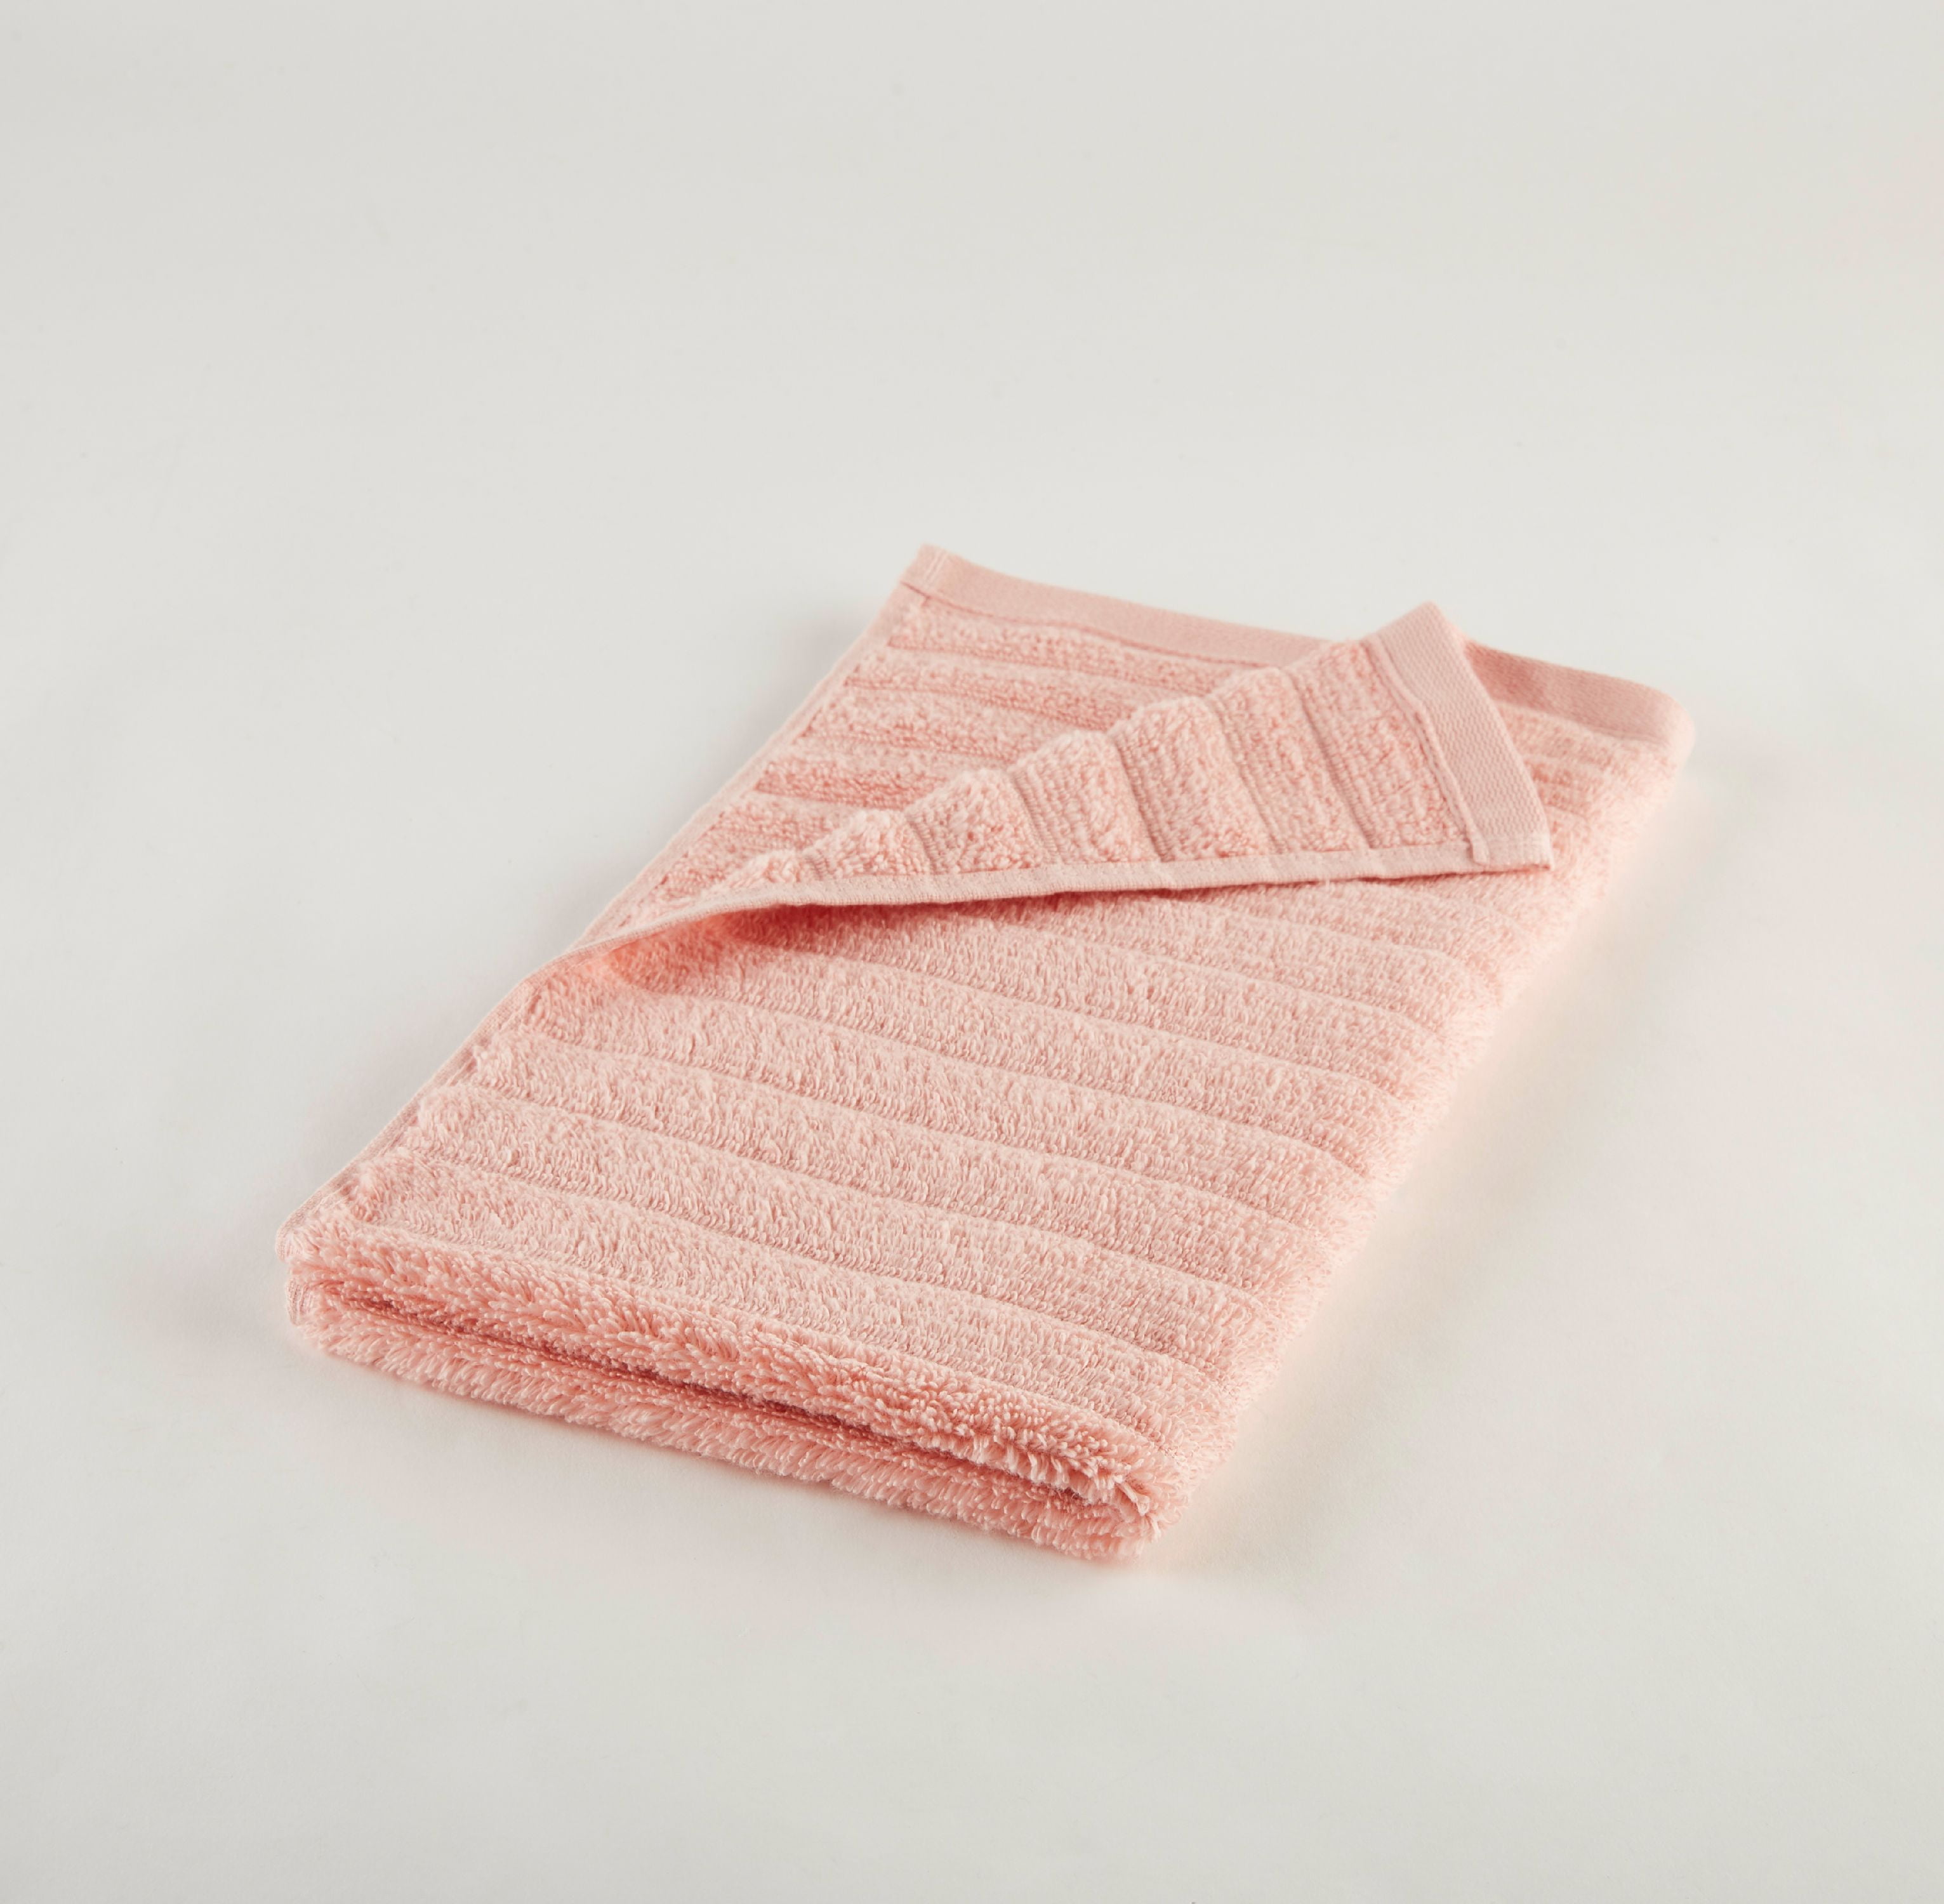 Mainstays Performance Textured Hand Towel, 26